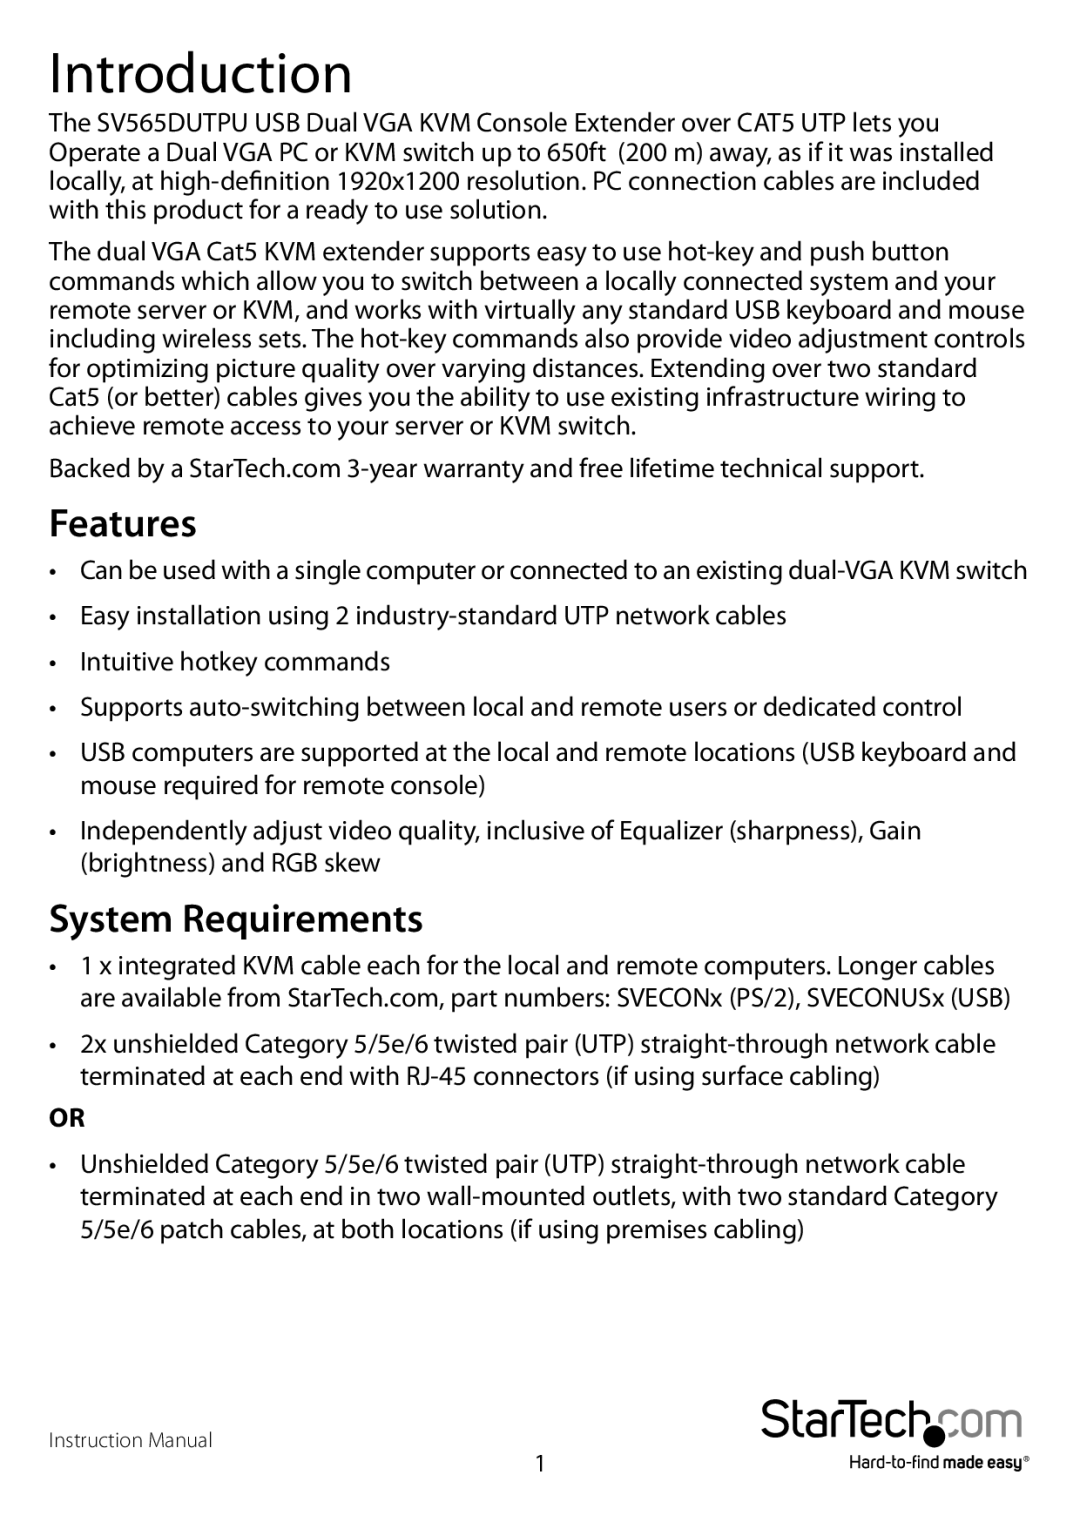 StarTech.com usb dual vga cat5 kvm console extender - 650ft/200m manual Introduction, Features, System Requirements 